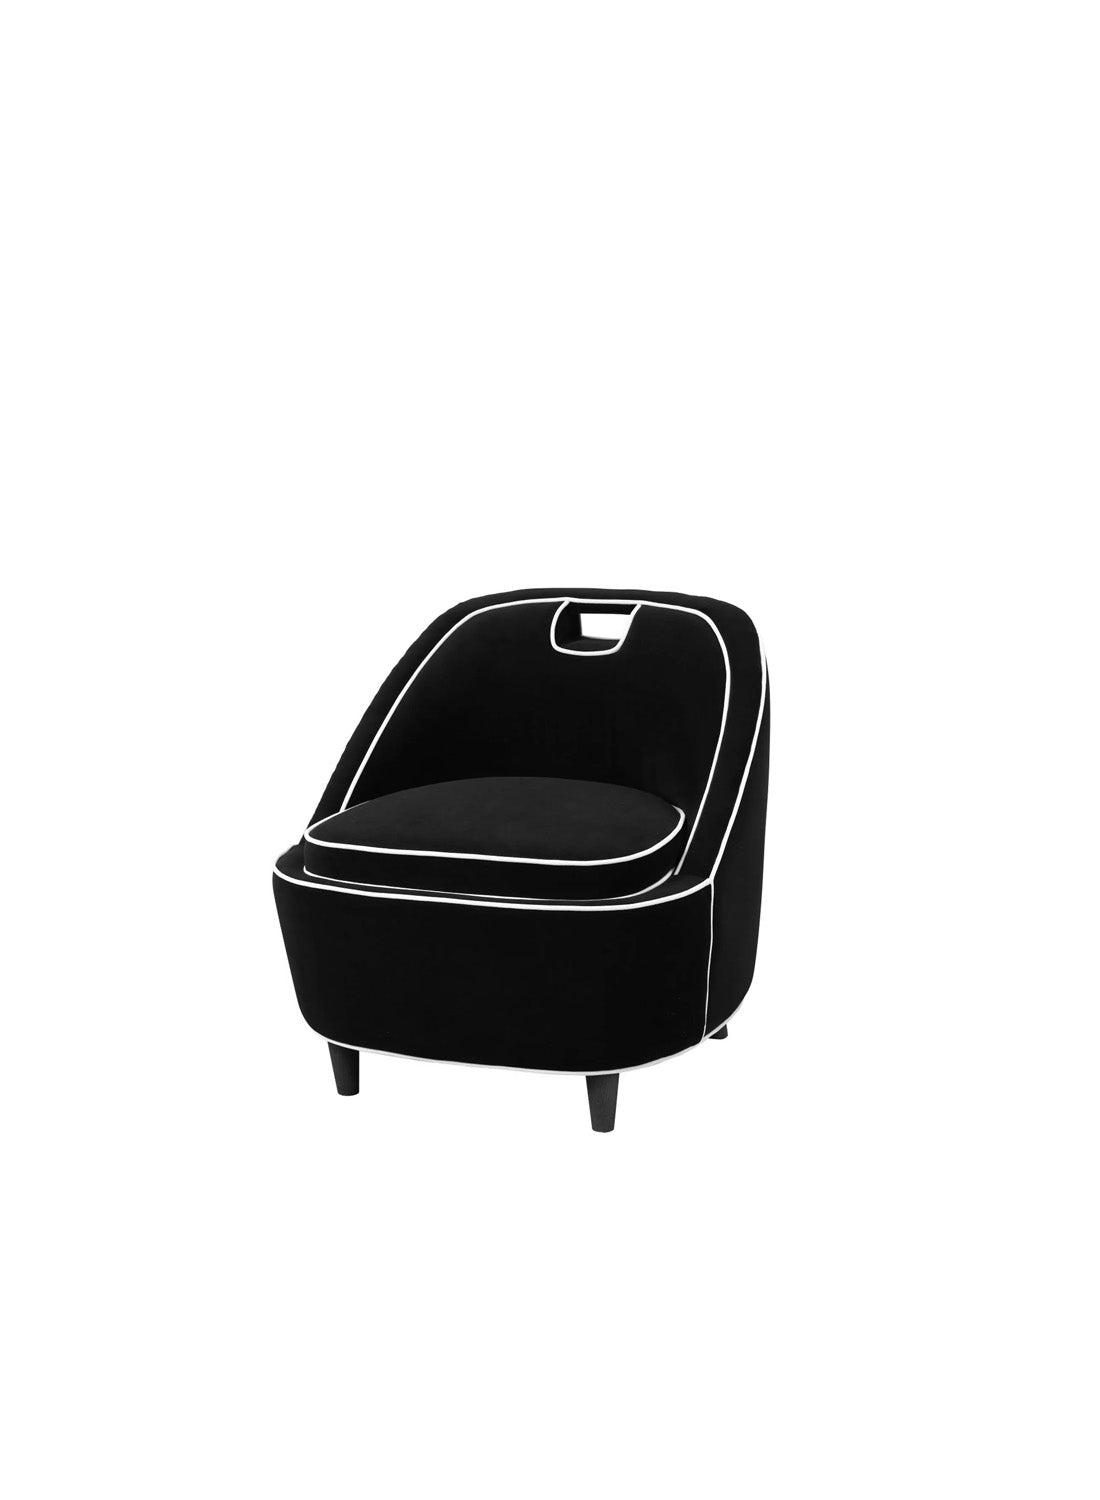 Serenity Club Chair, Black